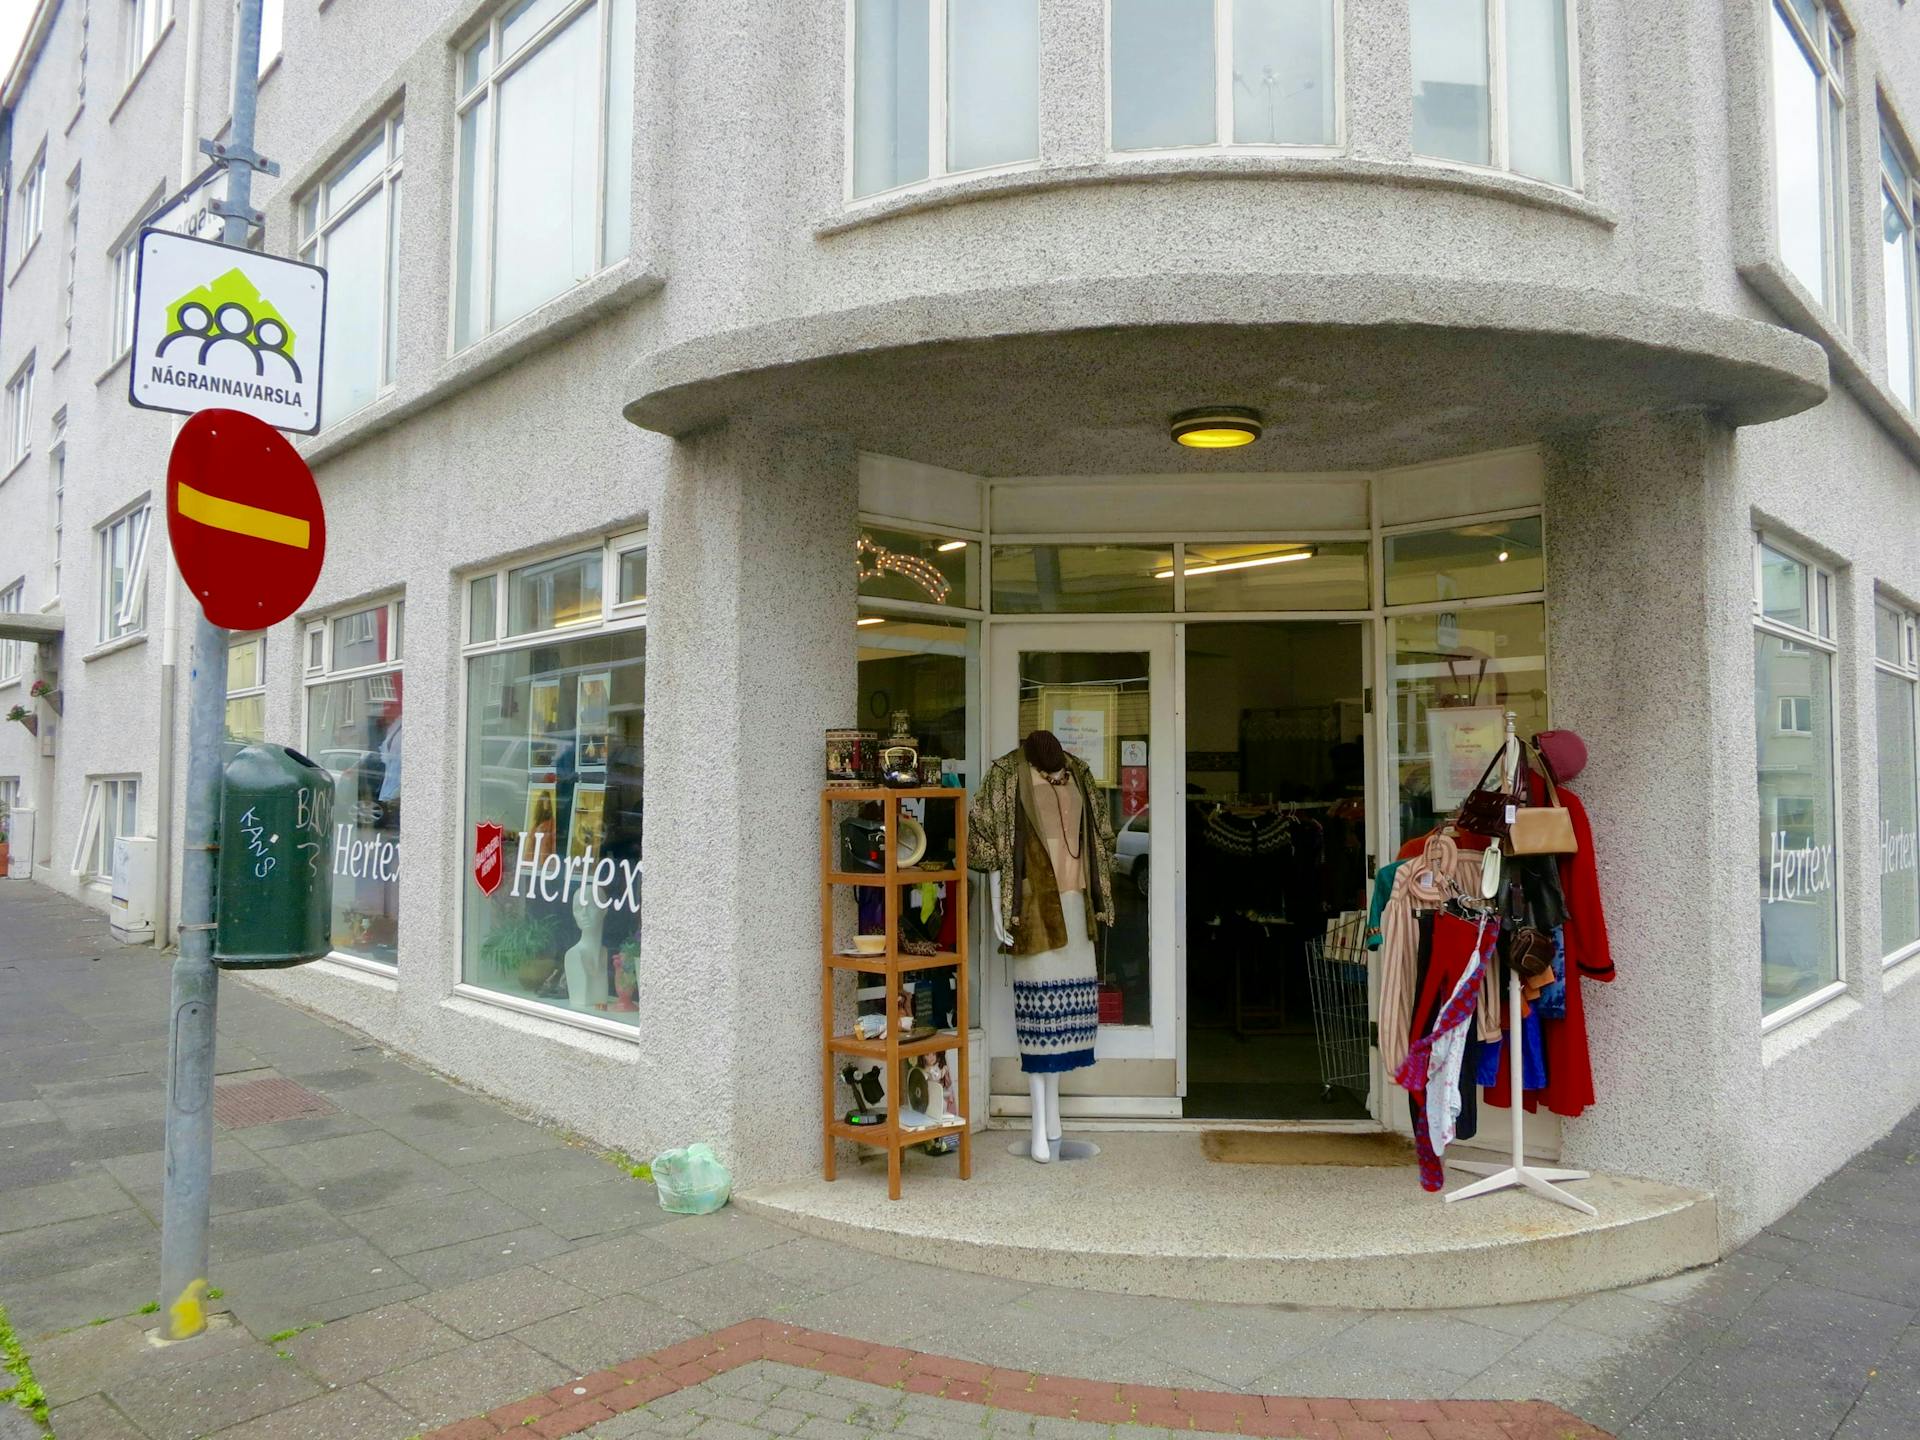 The Hertex thrift store in Garðastræti. 